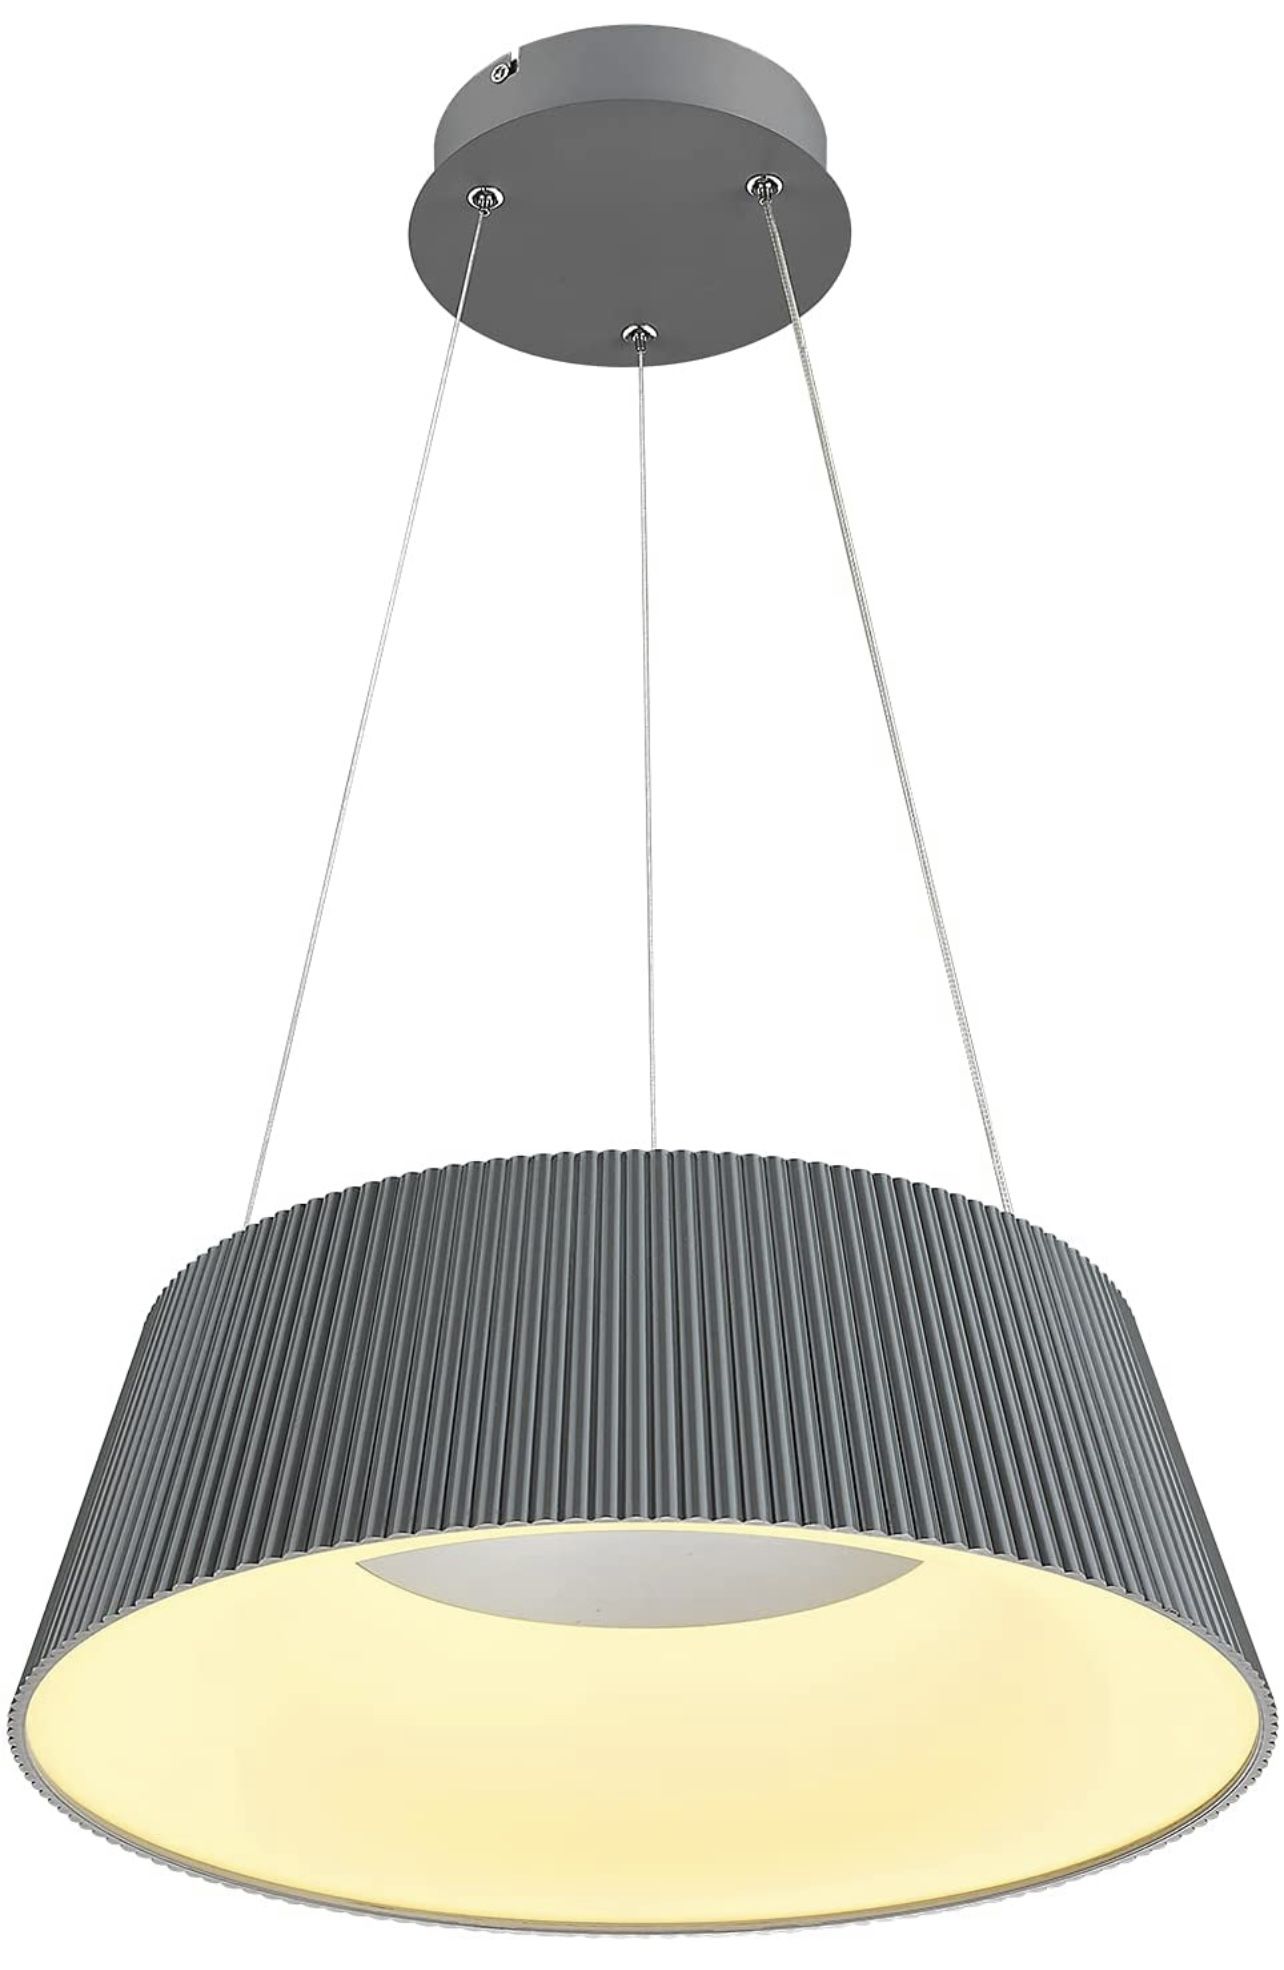 18" LED Kitchen Light - Mstar Farmhouse Pendant Light Fixture 3000K Dimmable in Grey Finish for Living Room Kitchen Dining Room P8851 GR  18" Grey Far